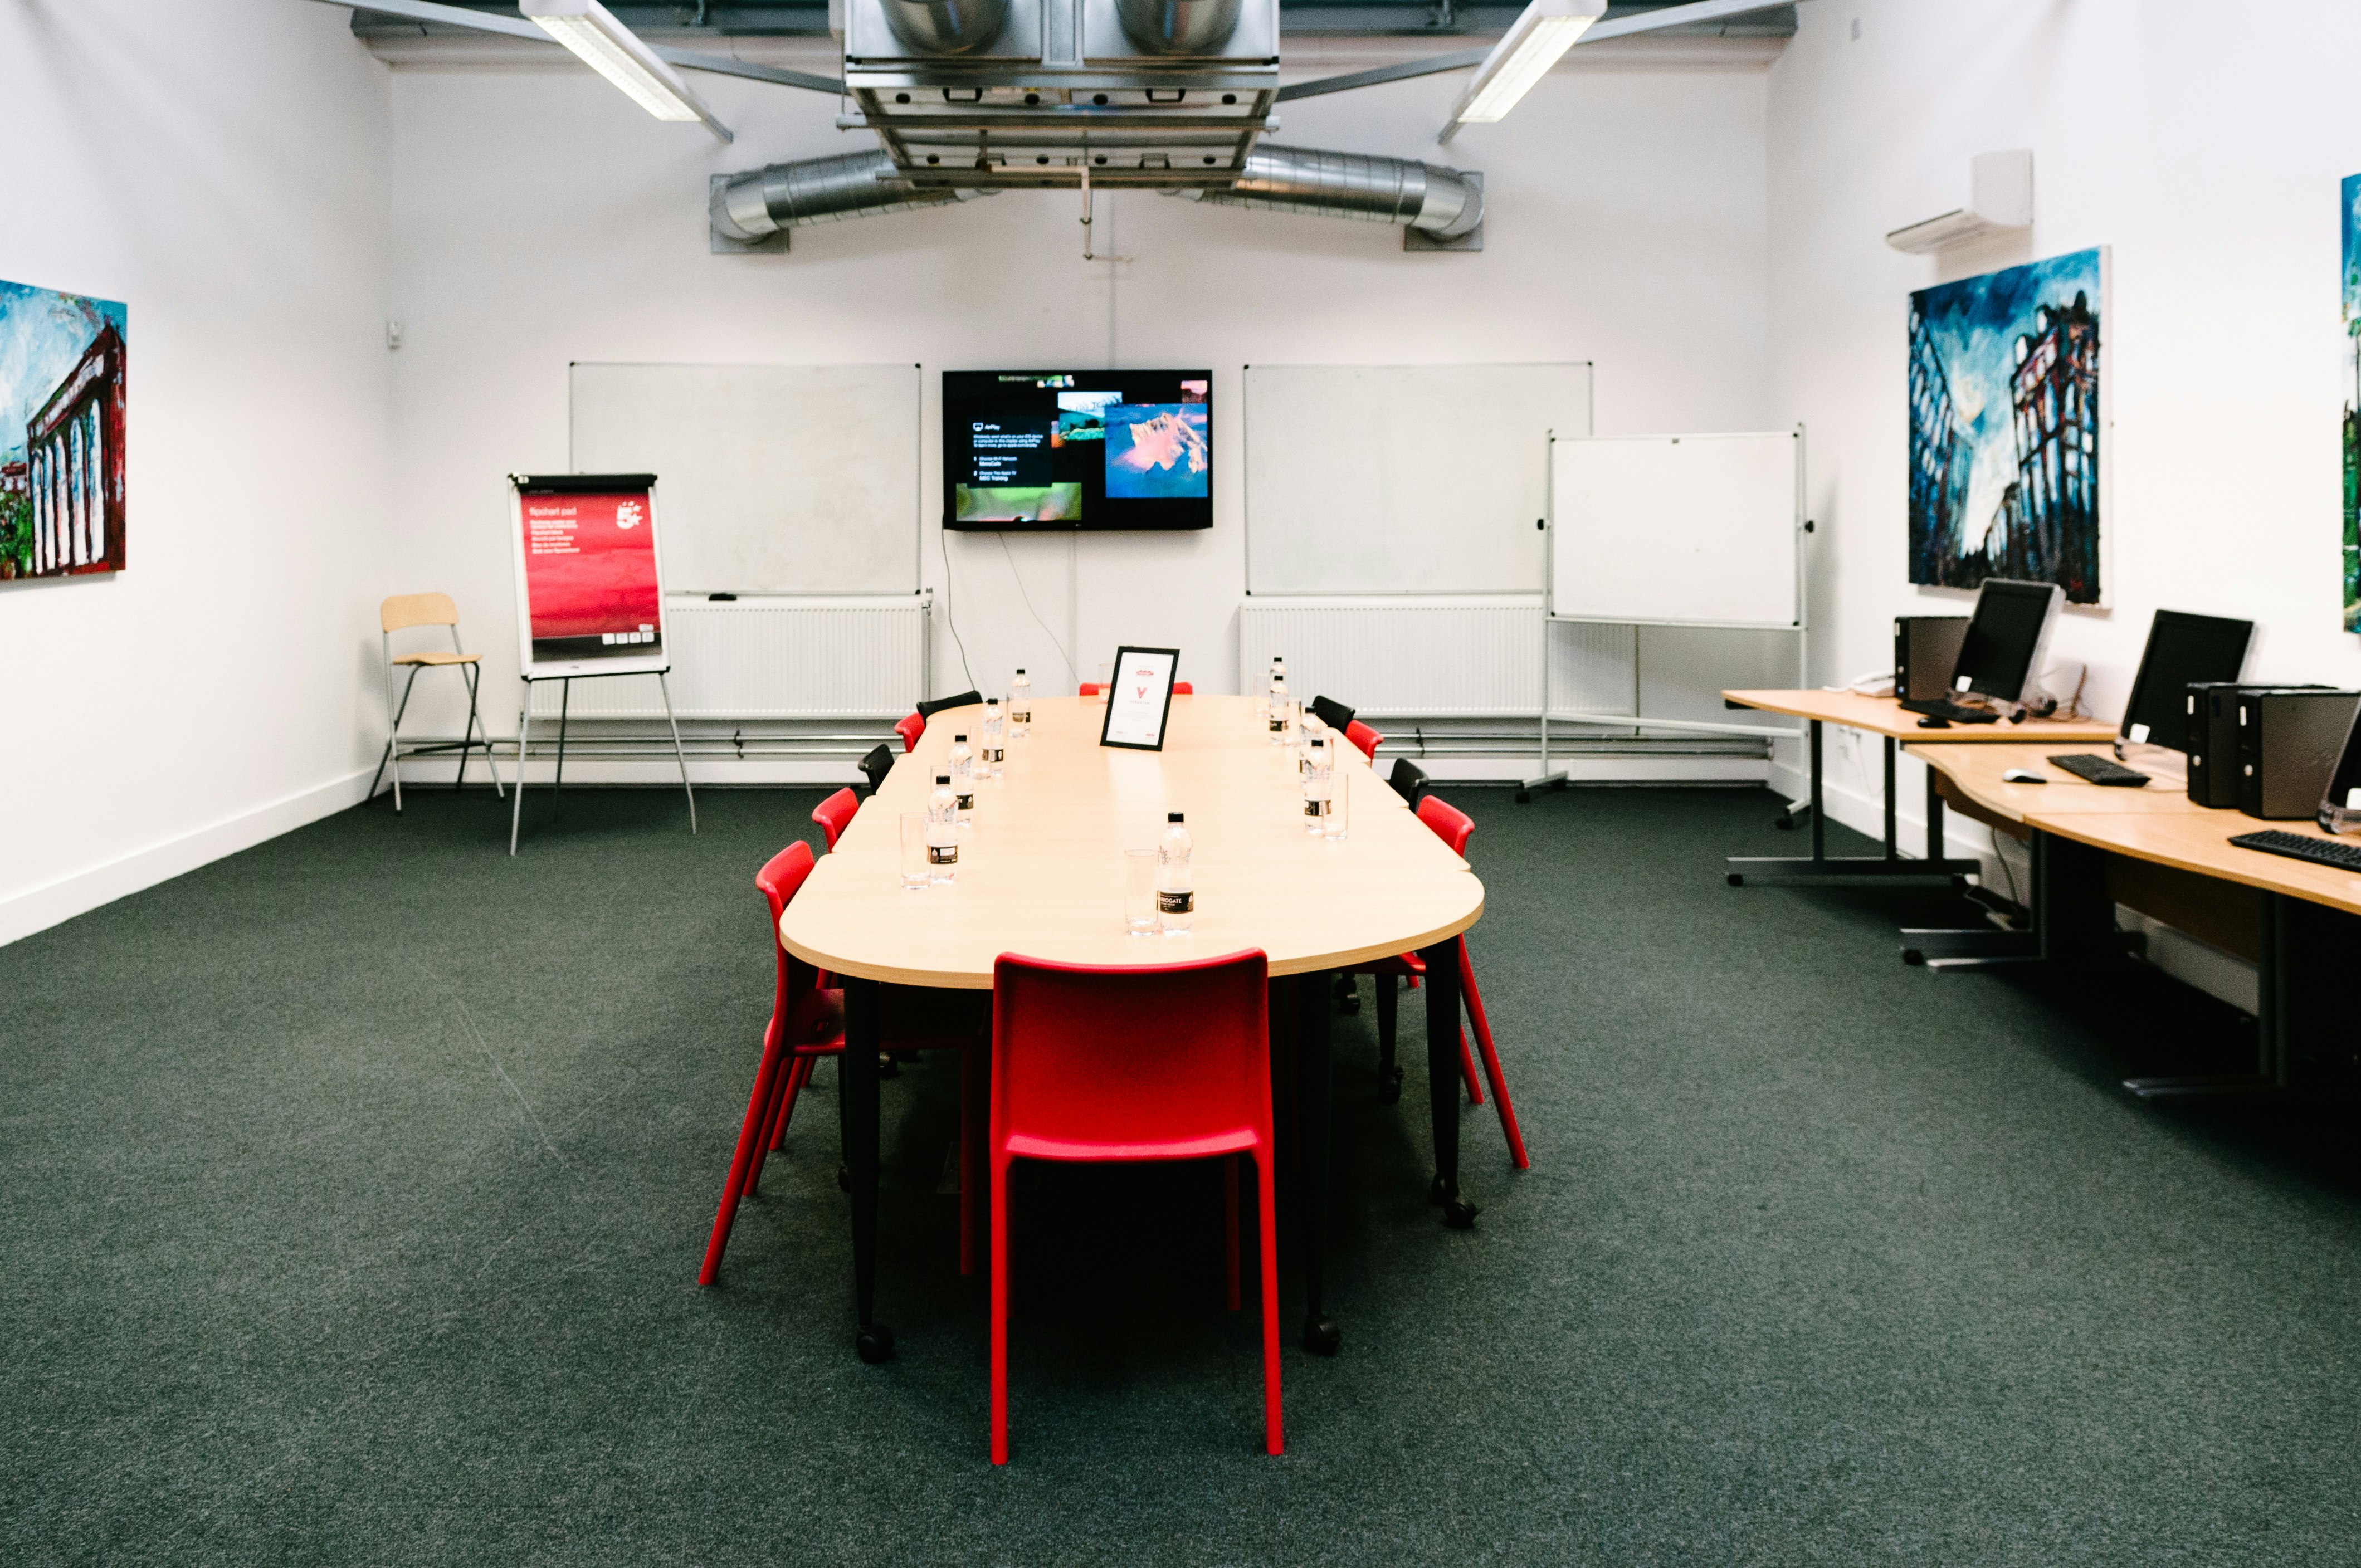 The Message Enterprise Centre - The Training Room image 1